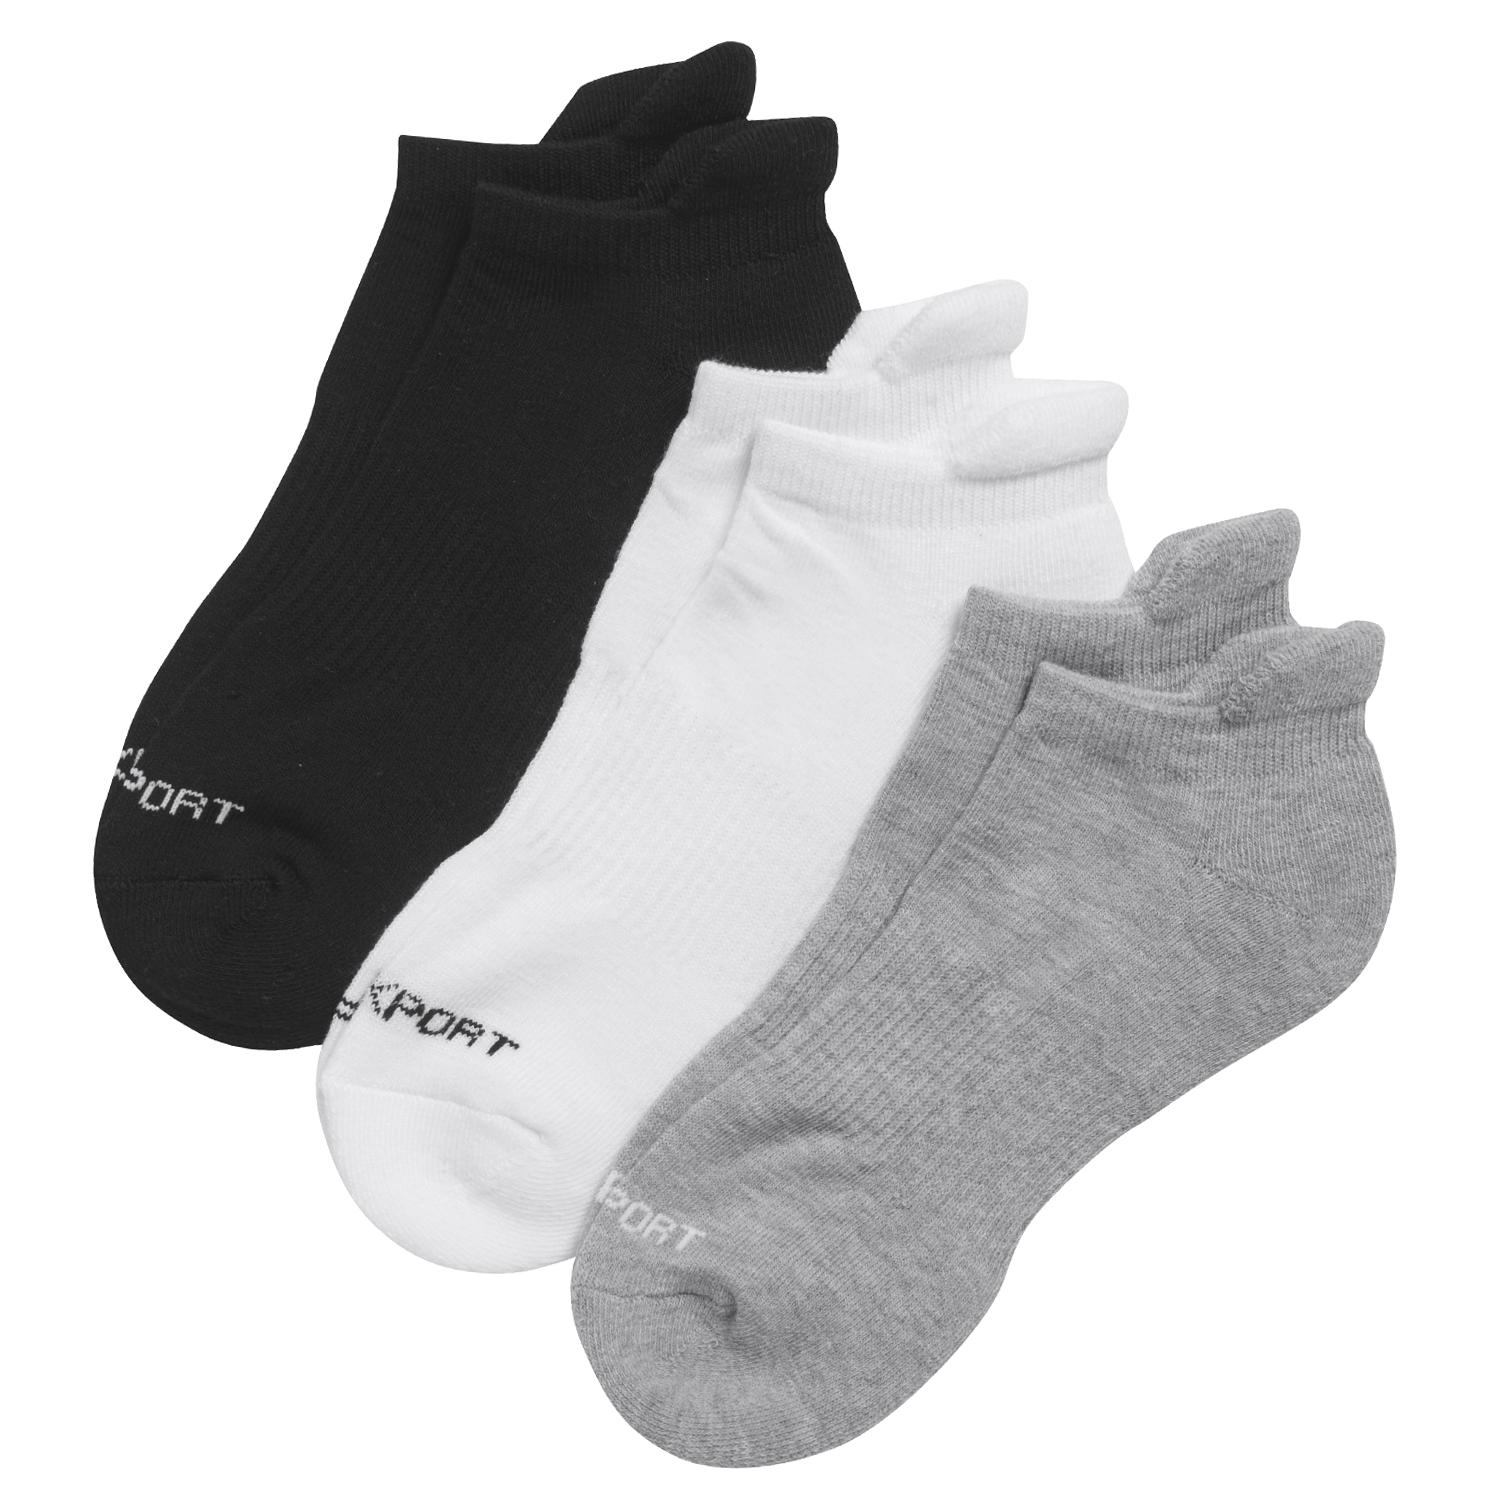 Heel Tab Socks in Gray - Lyst